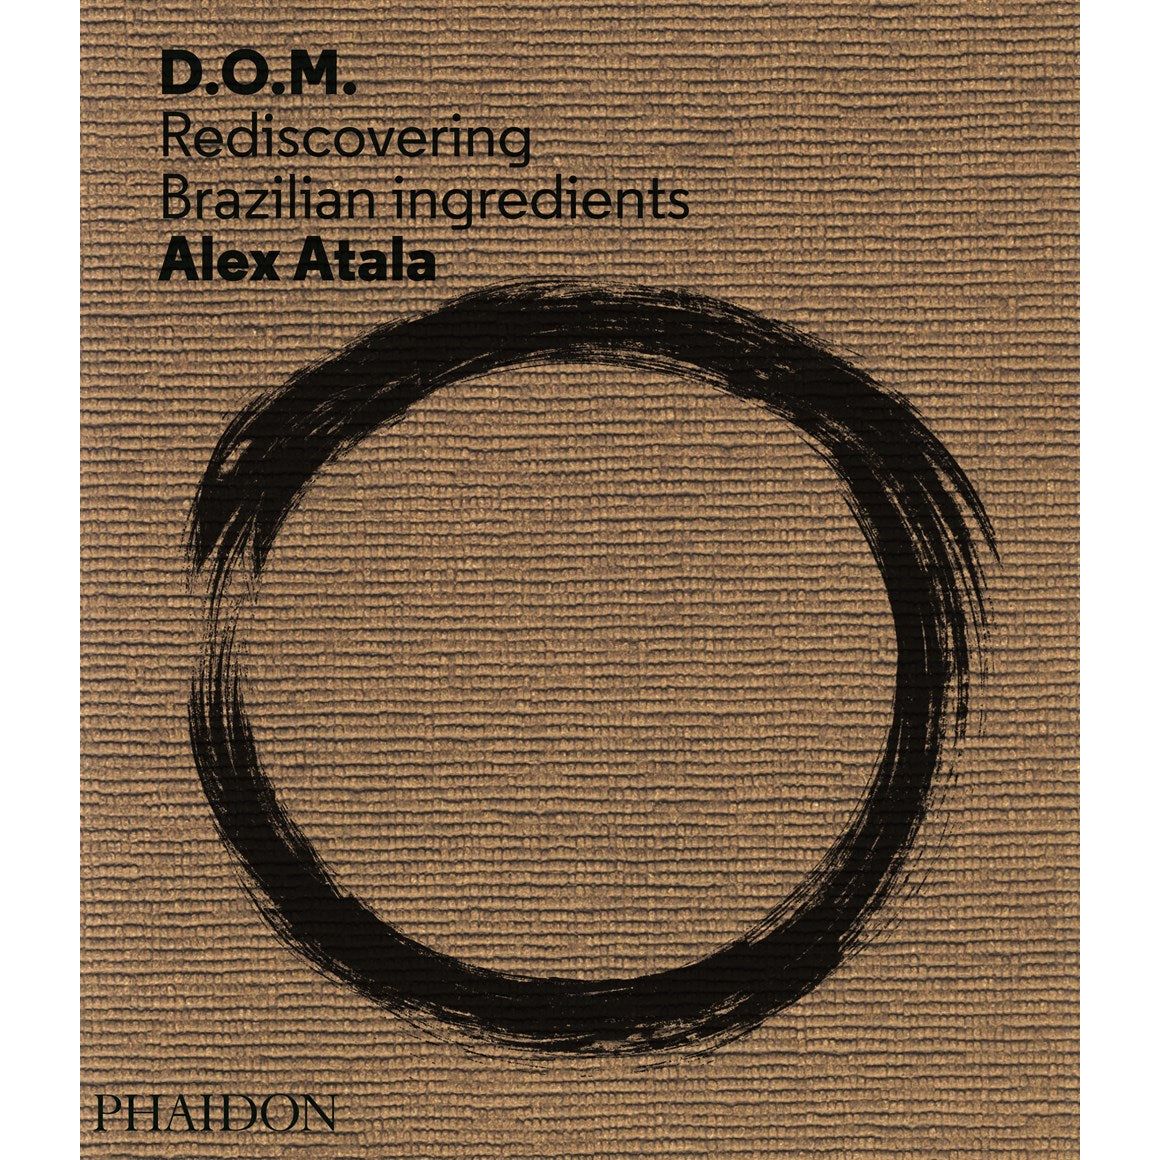 D.O.M.: Rediscovering Brazilian Ingredients (Alex Atala)